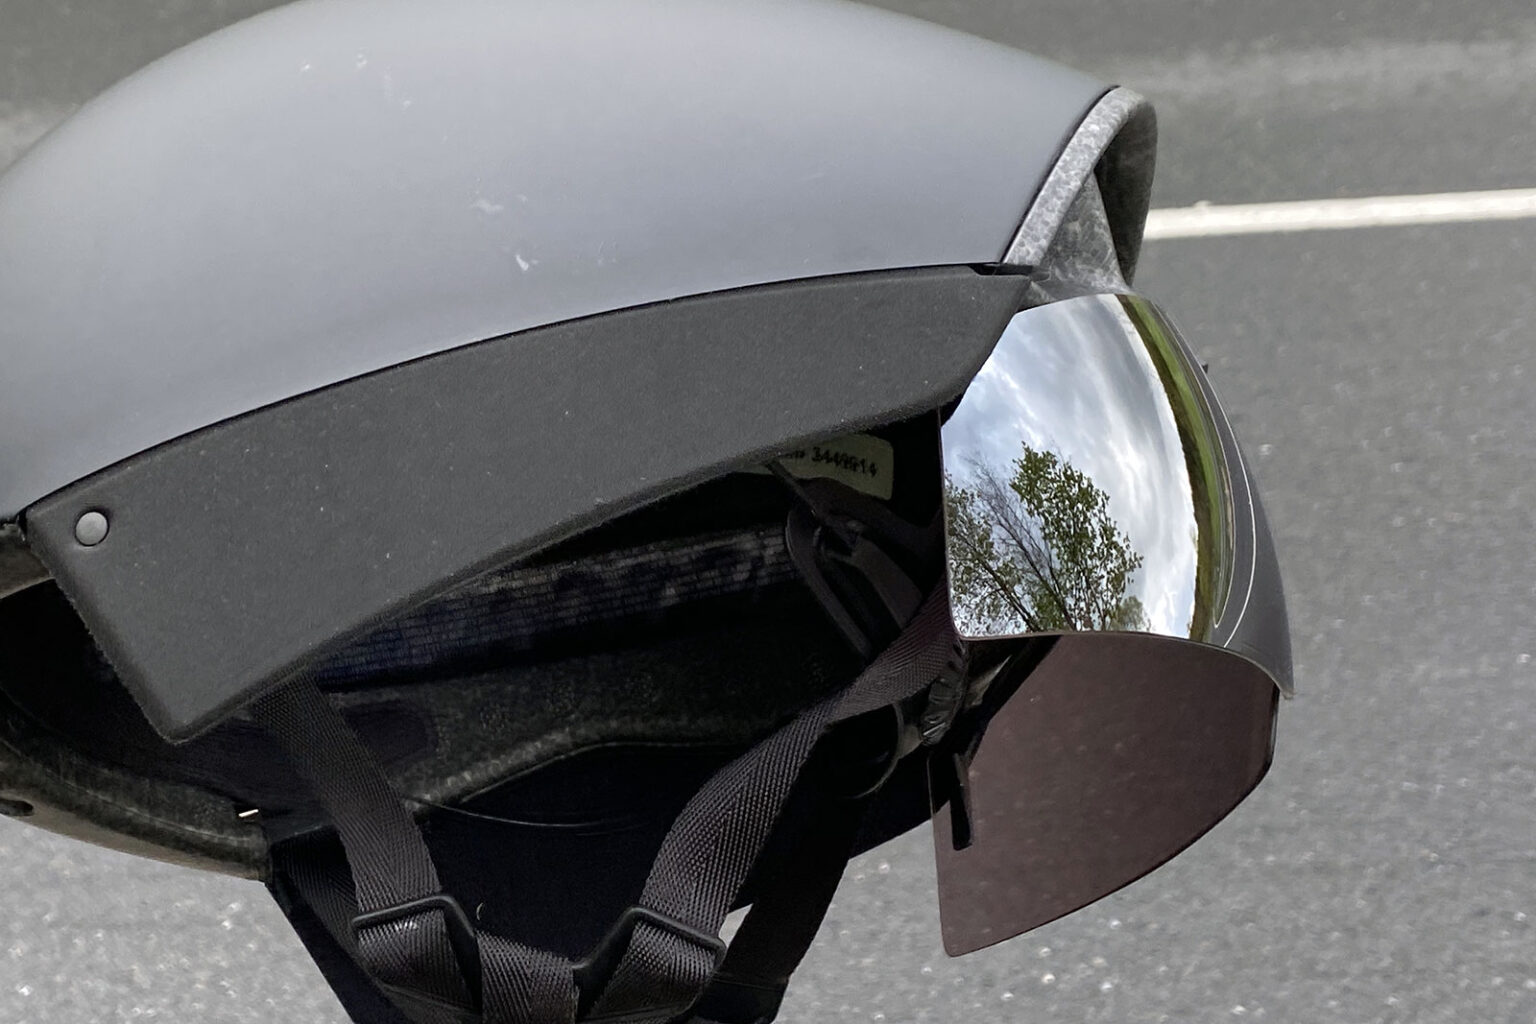 POC-Procen-Air-mini-aero-road-race-helmet-inspired-by-TT-aerodynamics_visor-stowed-at-the-back-1536x1024.jpg